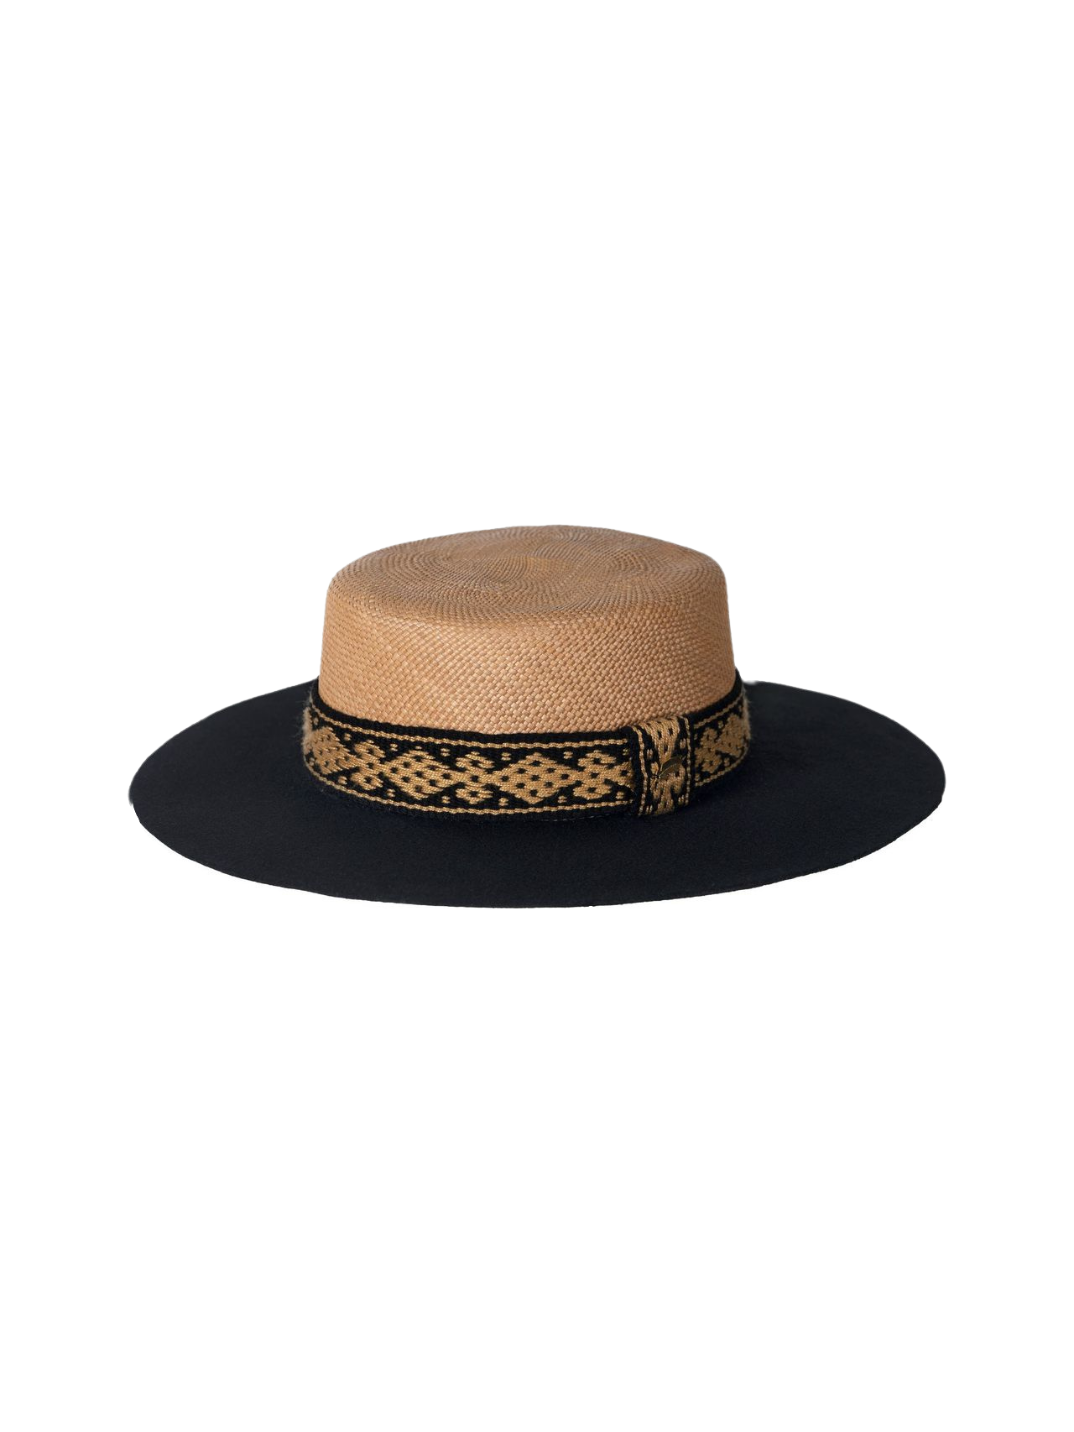 black felt & straw hat handmade in Columbia